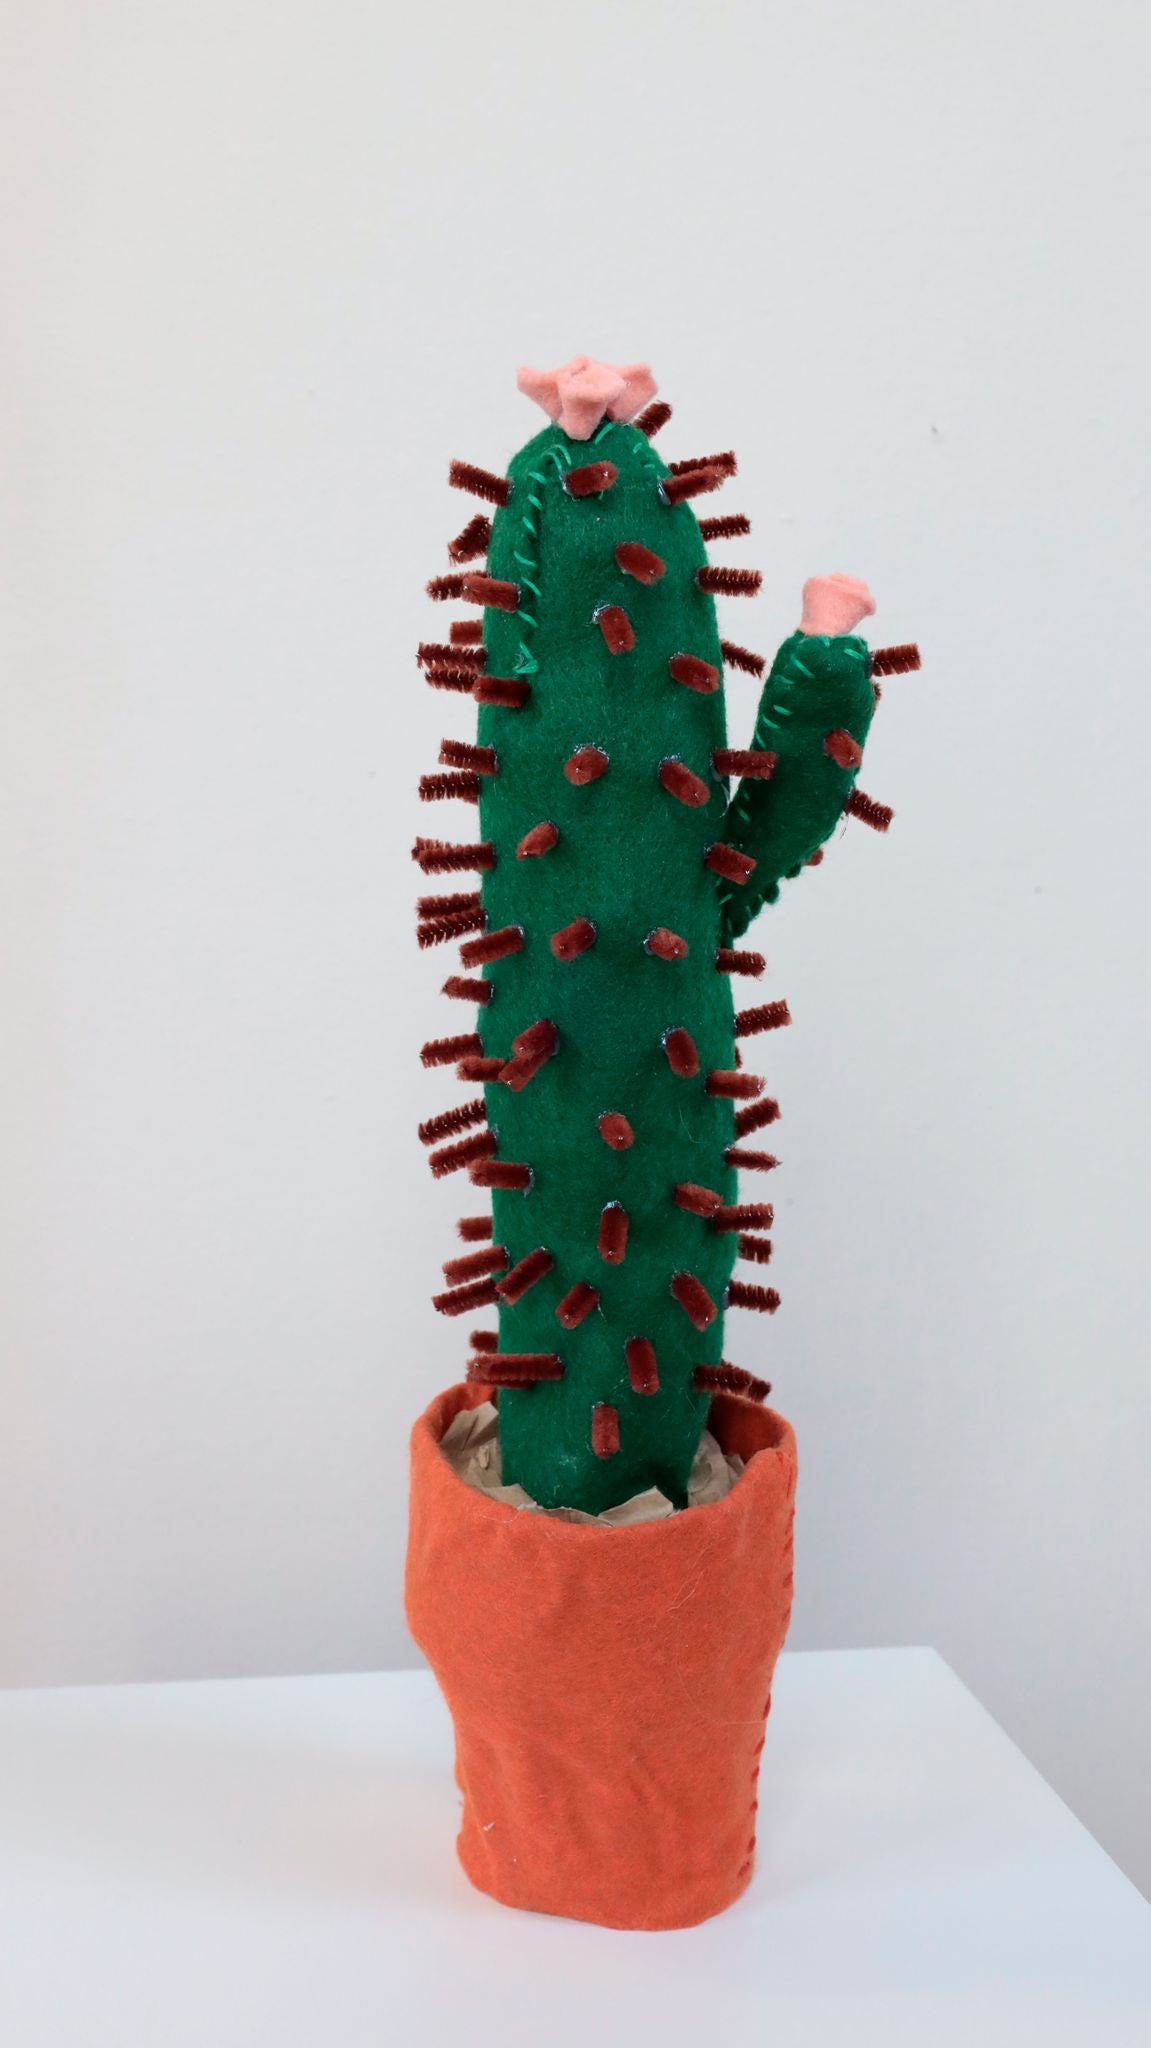 Taylor Lee Nicholson, "Cactus"